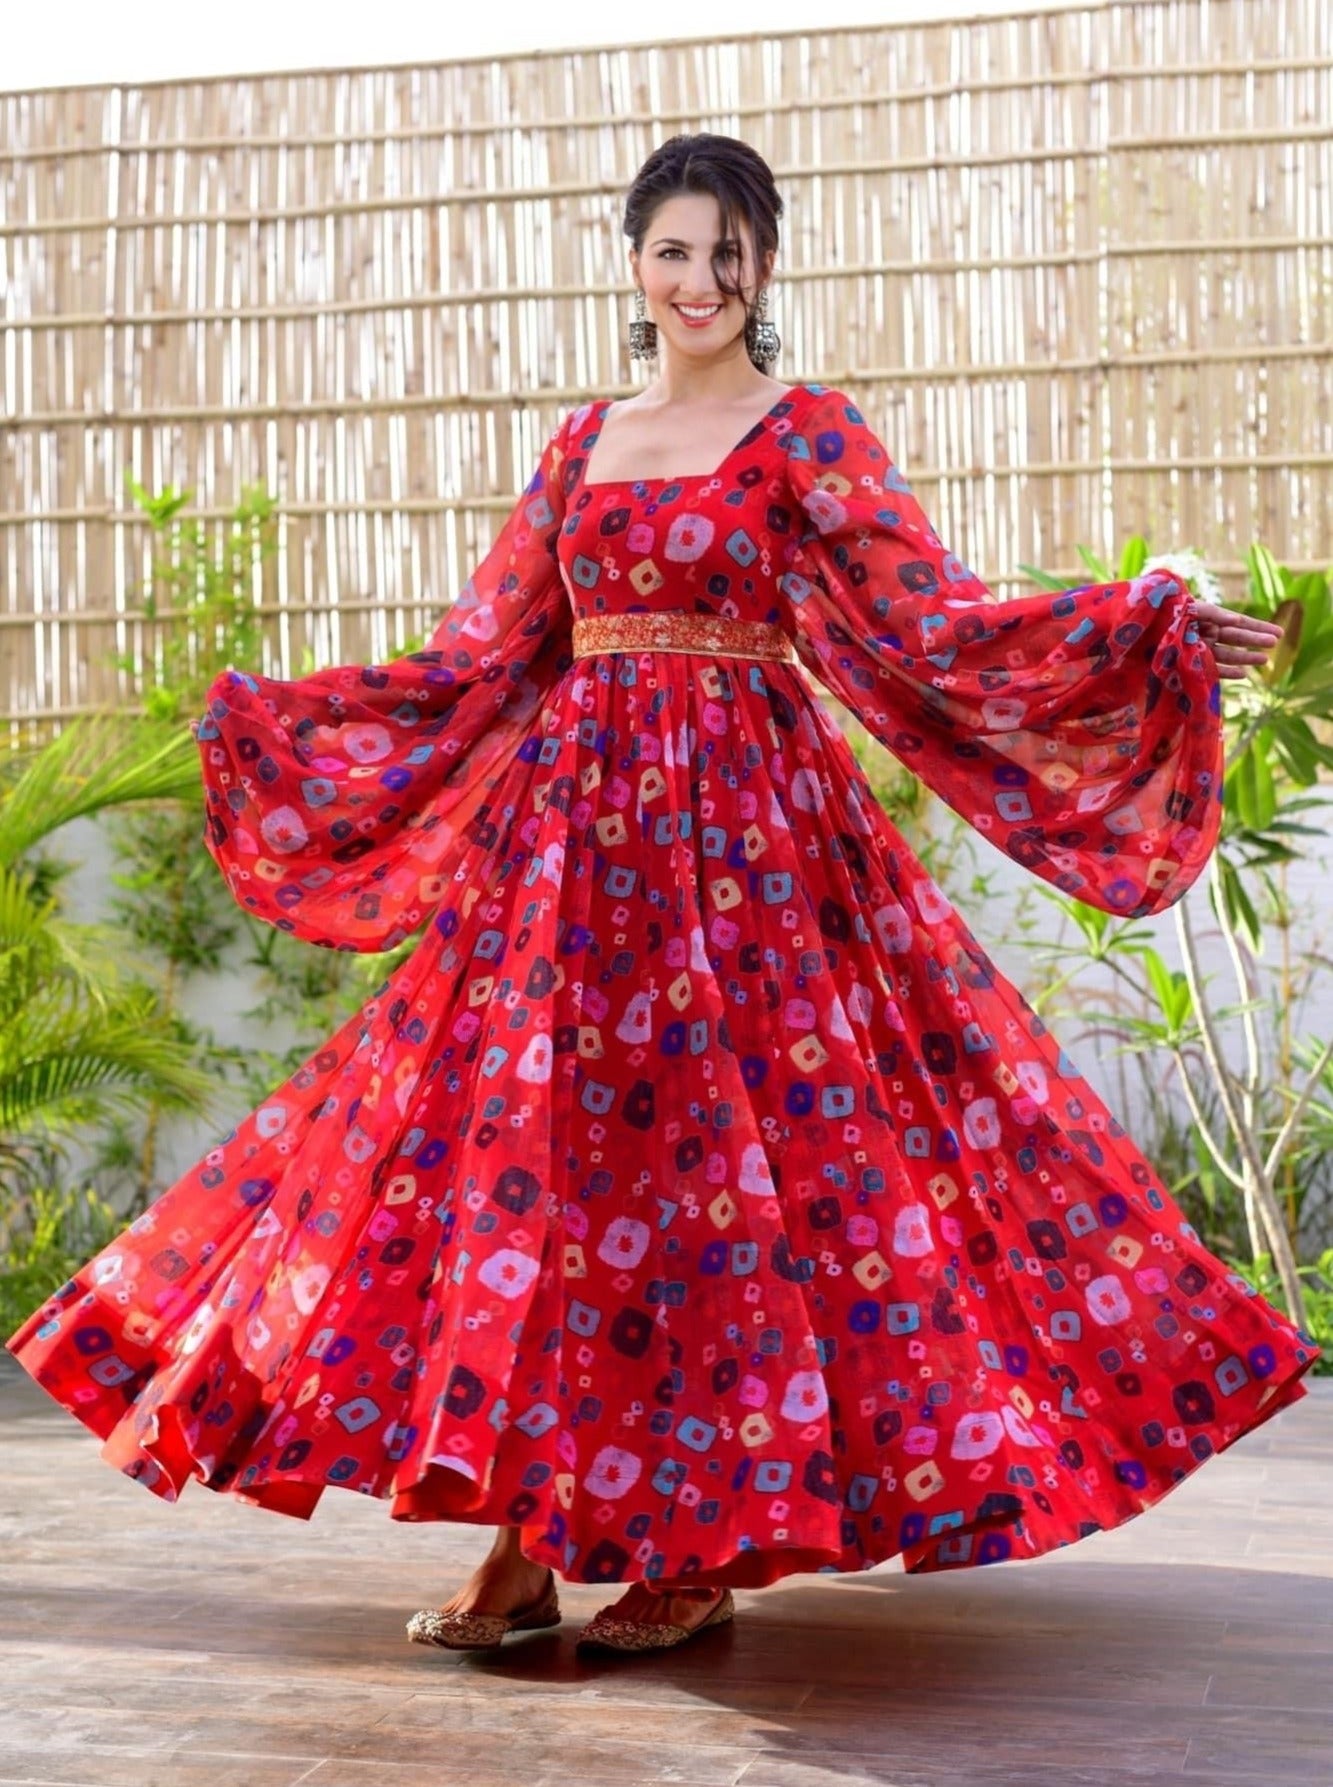 floral print dress